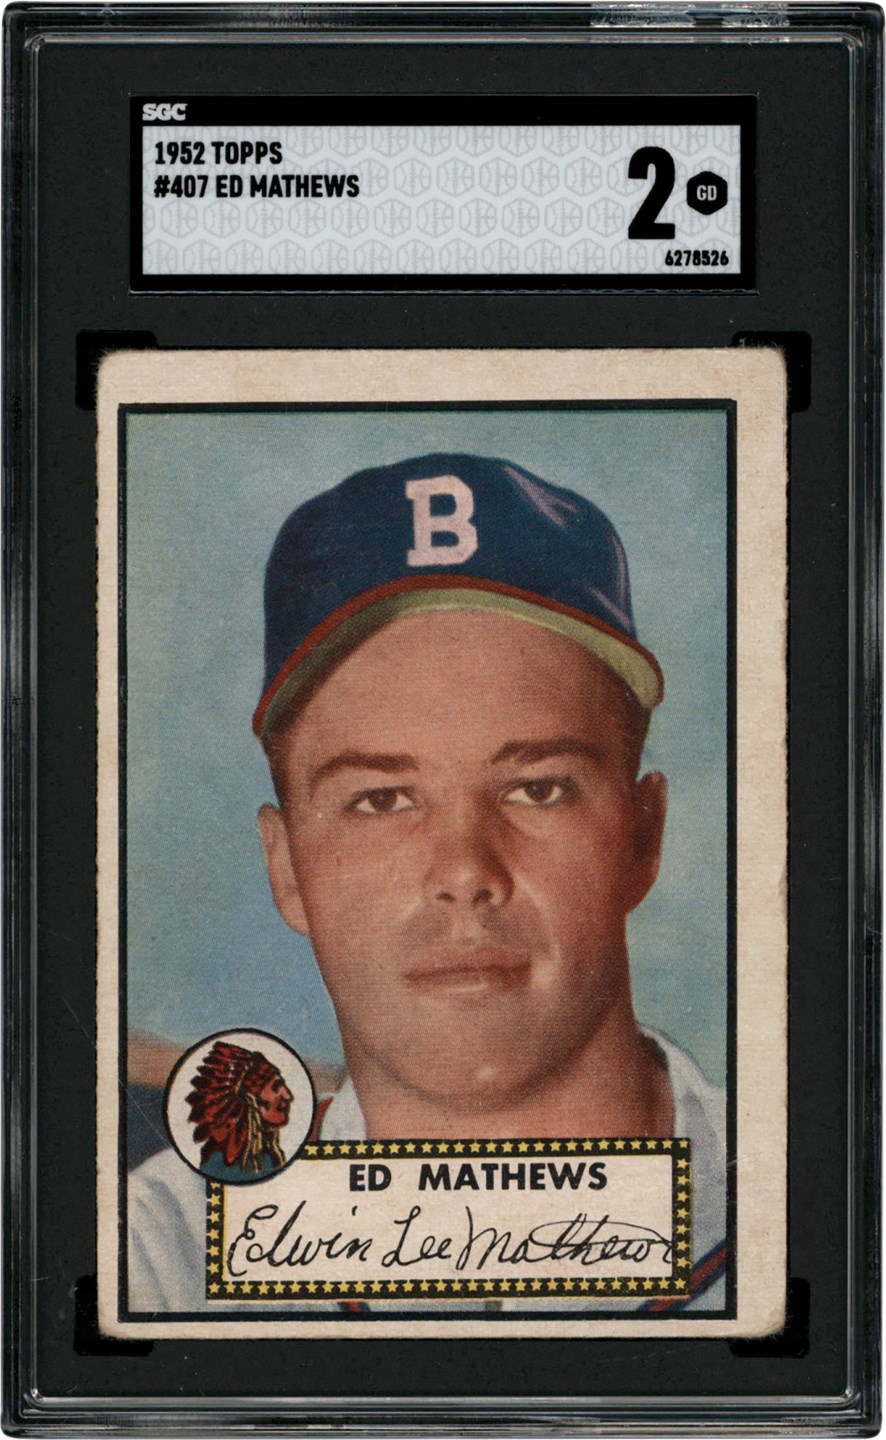 - 1952 Topps Baseball #407 Eddie Mathews Rookie SGC GD 2